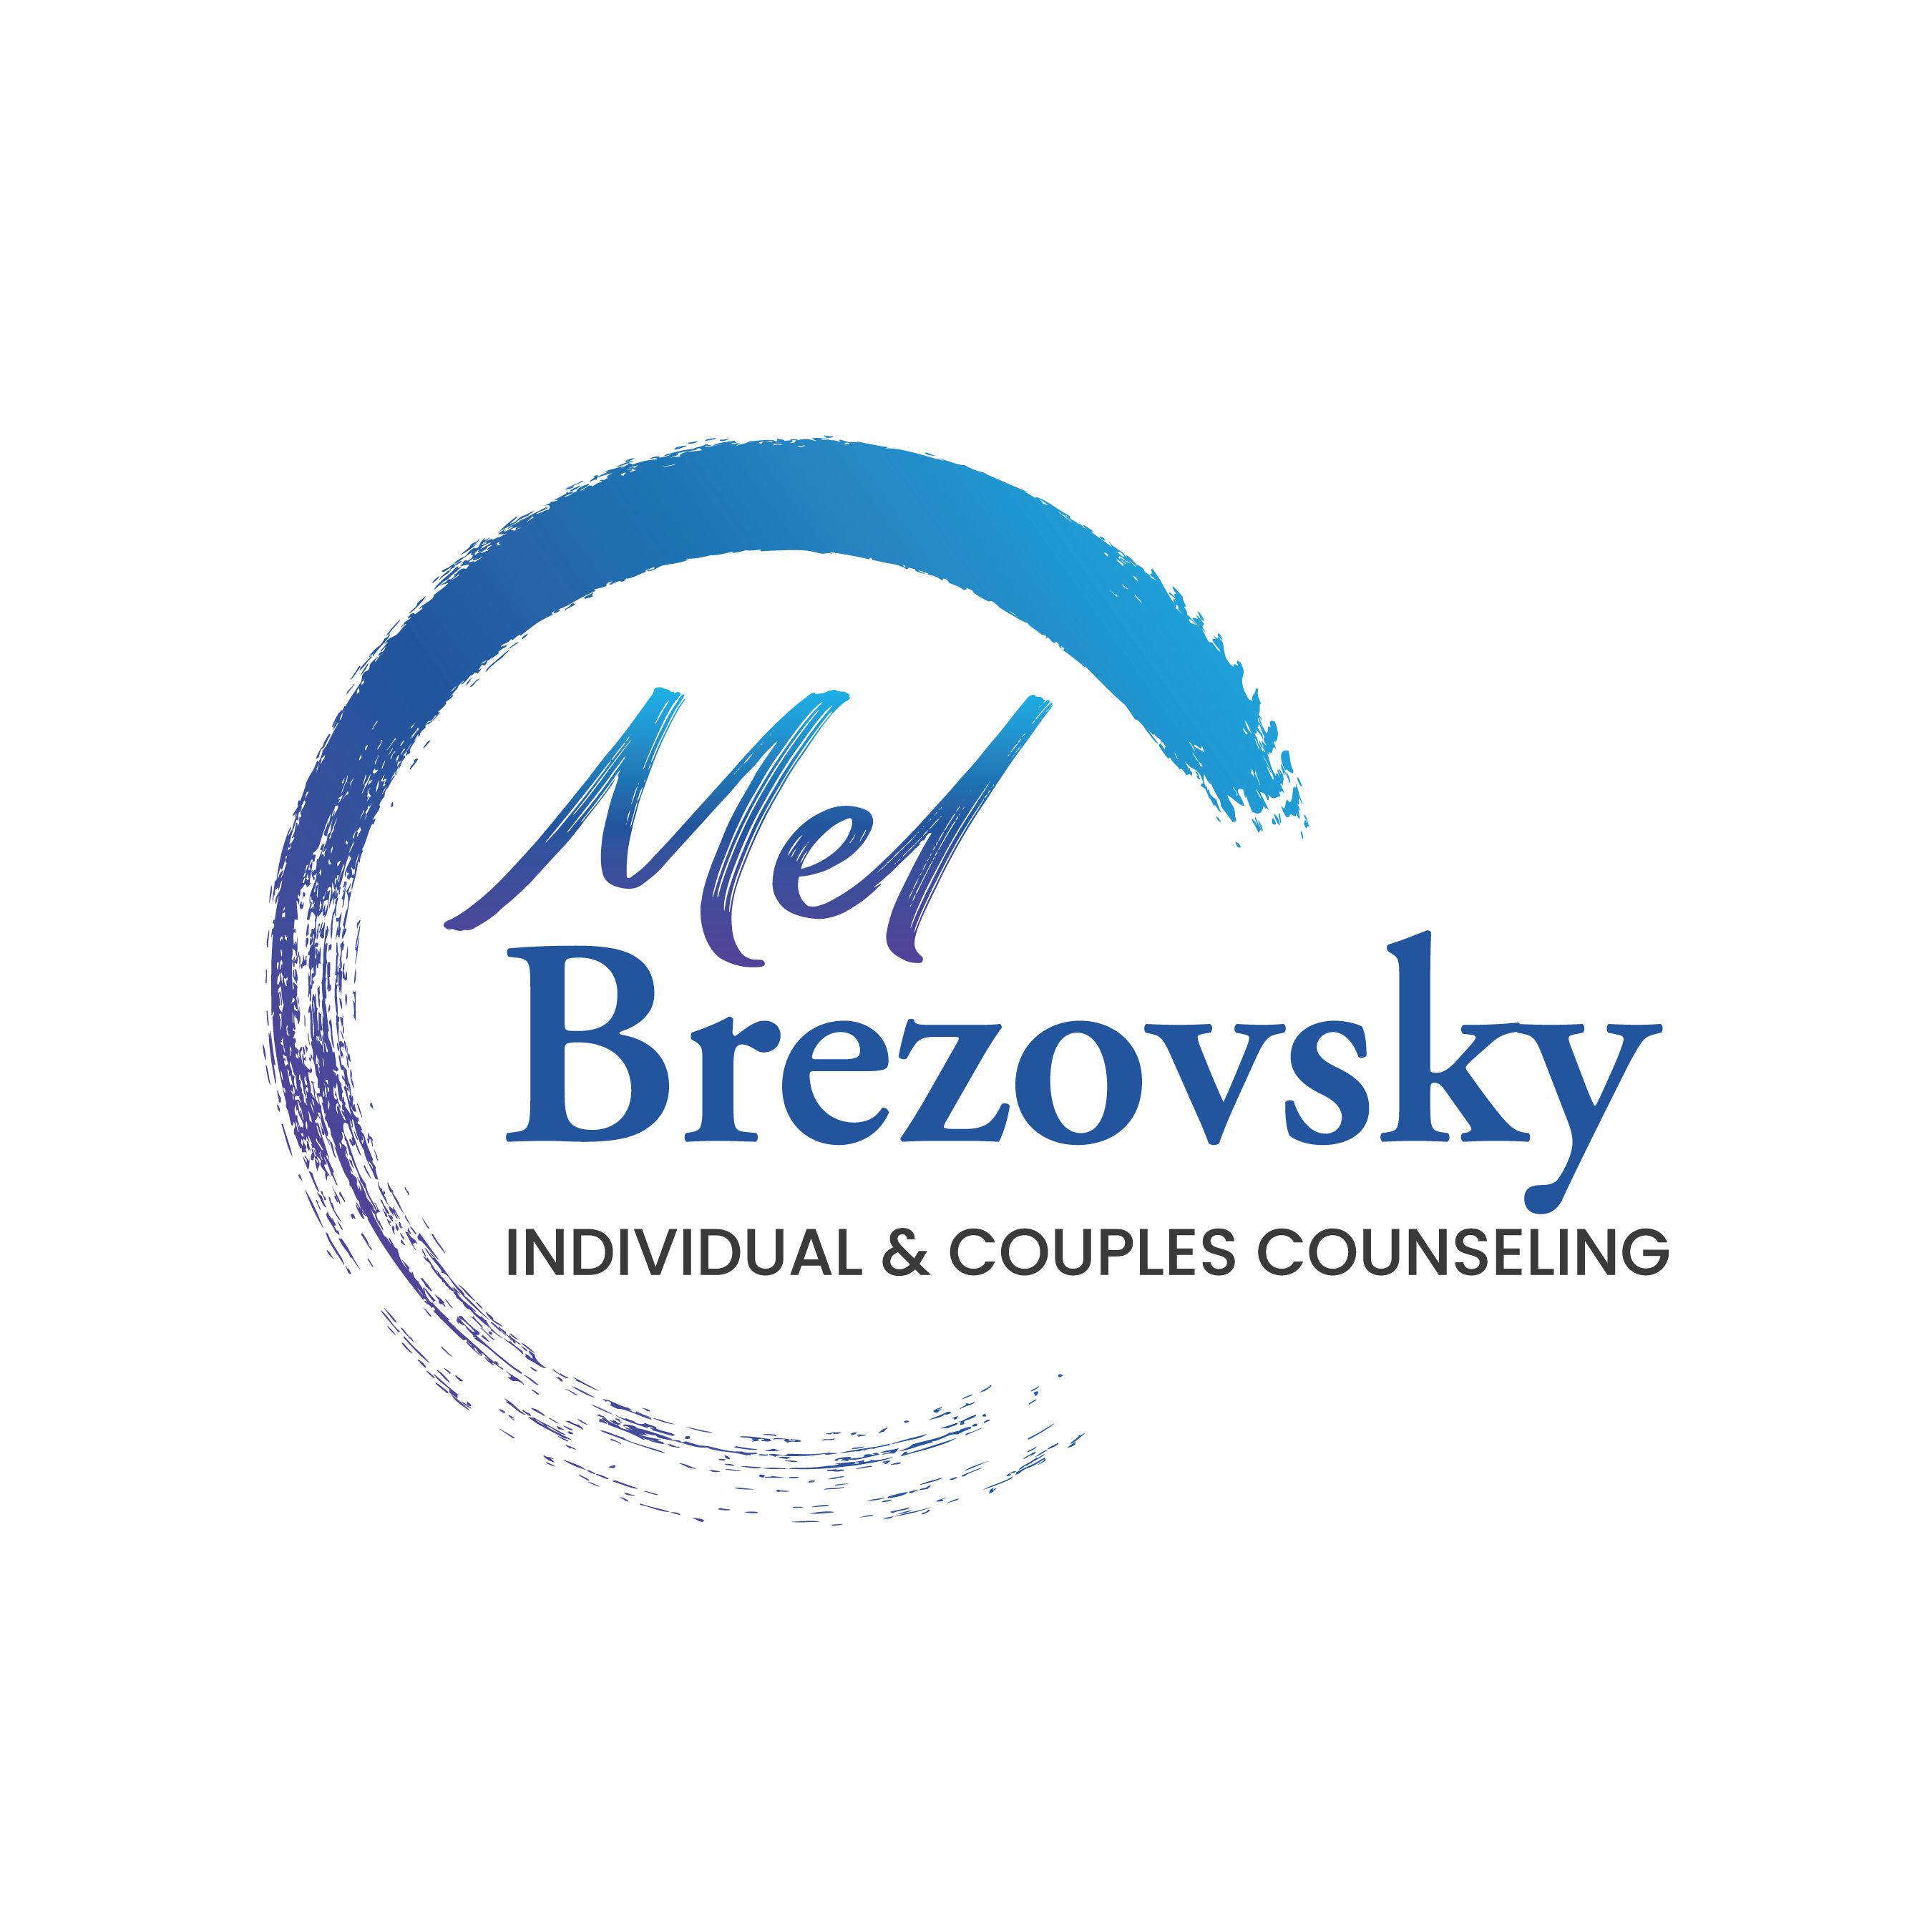 Mel Brezovsky, Individual and Couples Counseling - Ashburn, VA 20147 - (703)622-9559 | ShowMeLocal.com